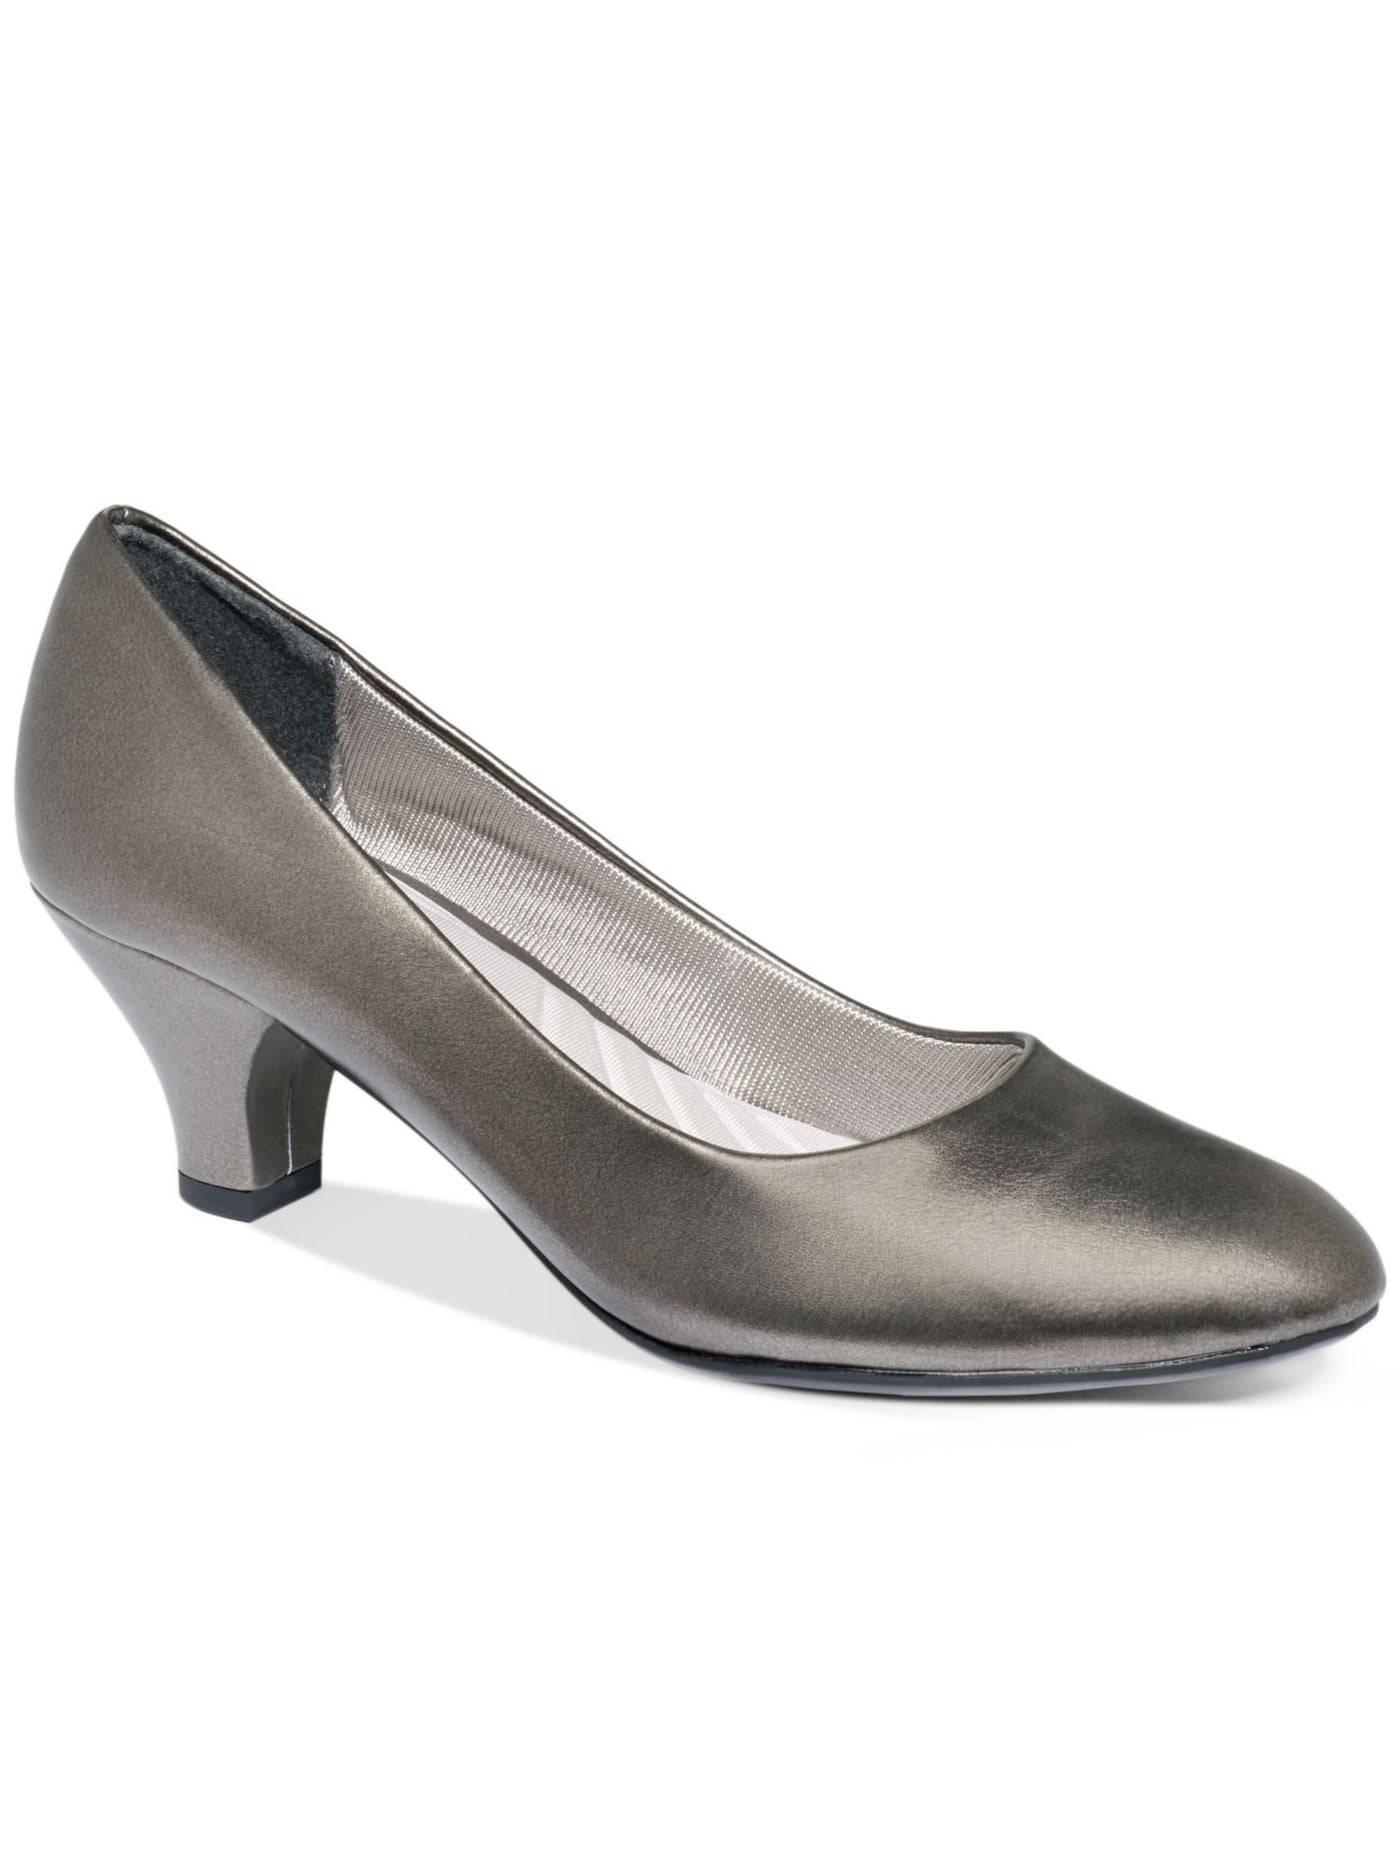 EASY STREET Womens Gray Cushioned Fabulous Almond Toe Cone Heel Slip On Pumps Shoes 11 W